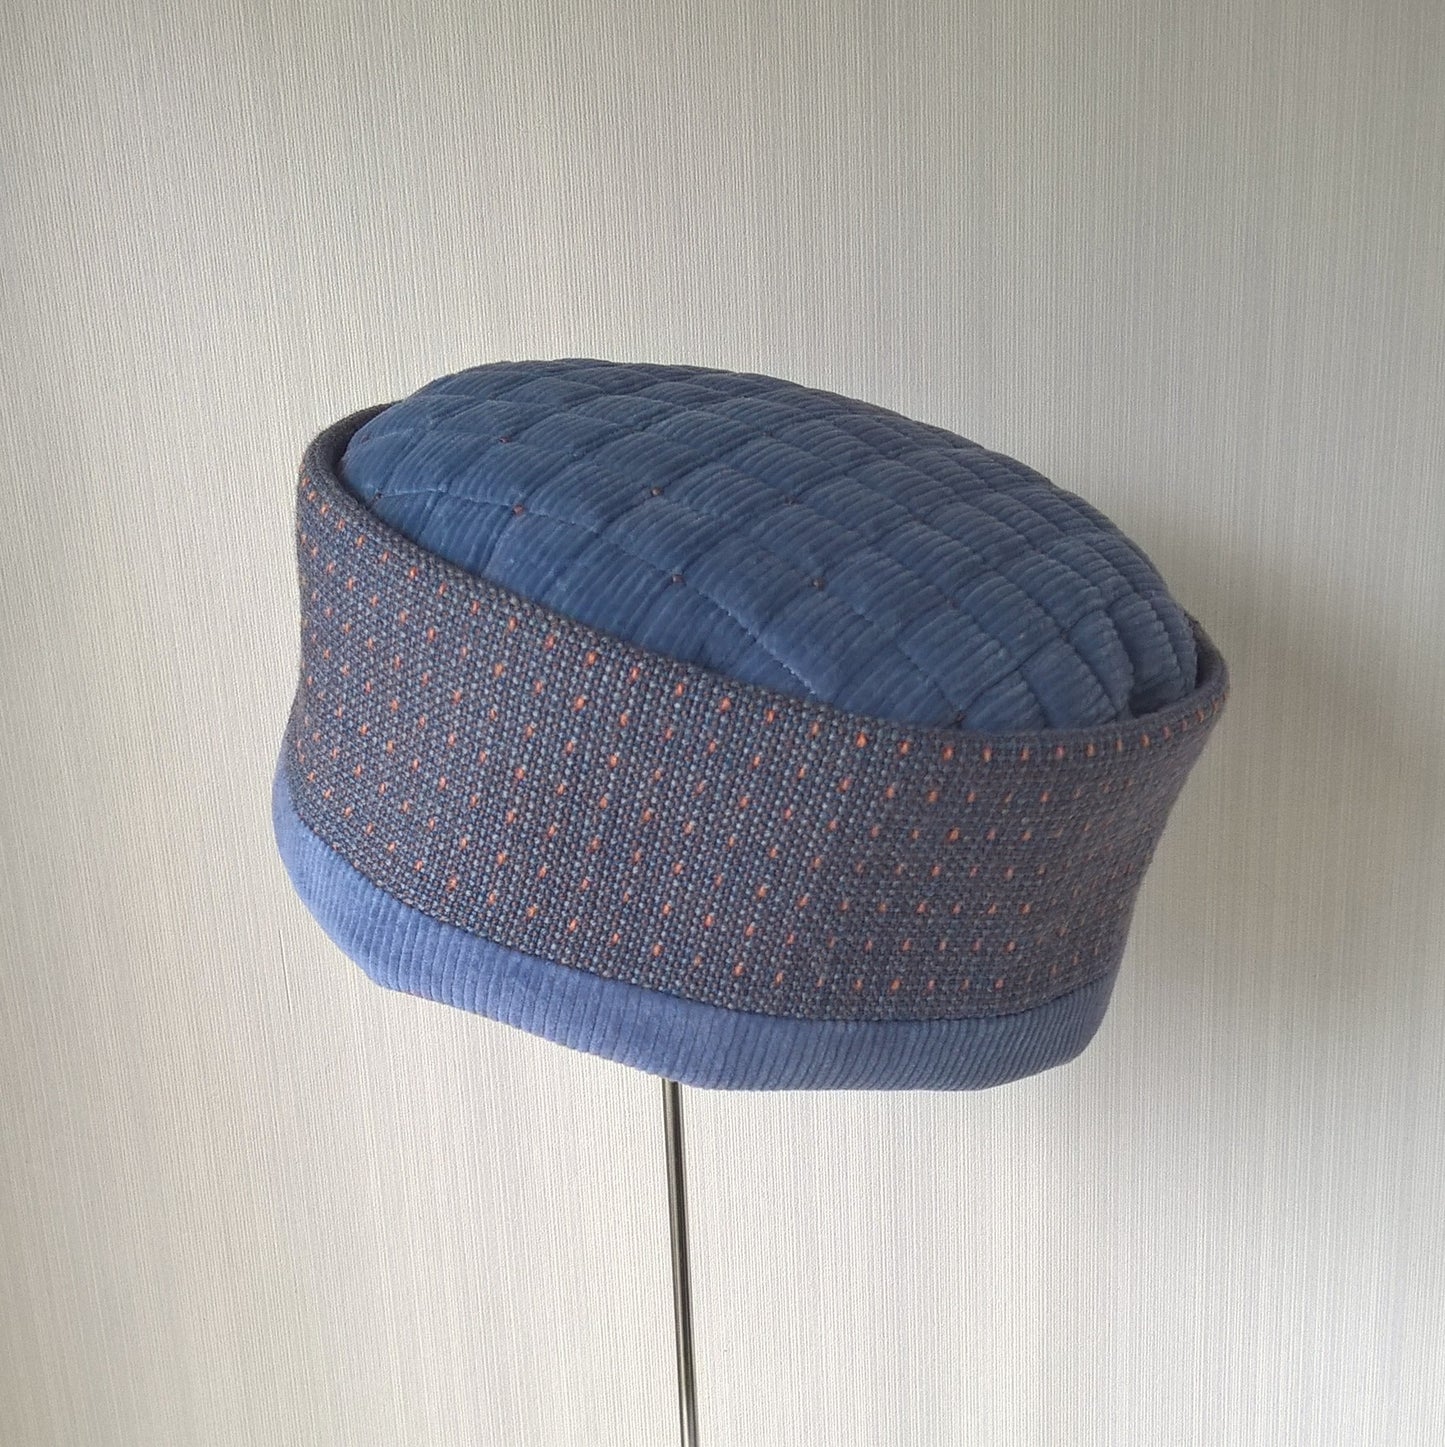 Ethnic smoking cap handmade in ultra soft blue corduroy